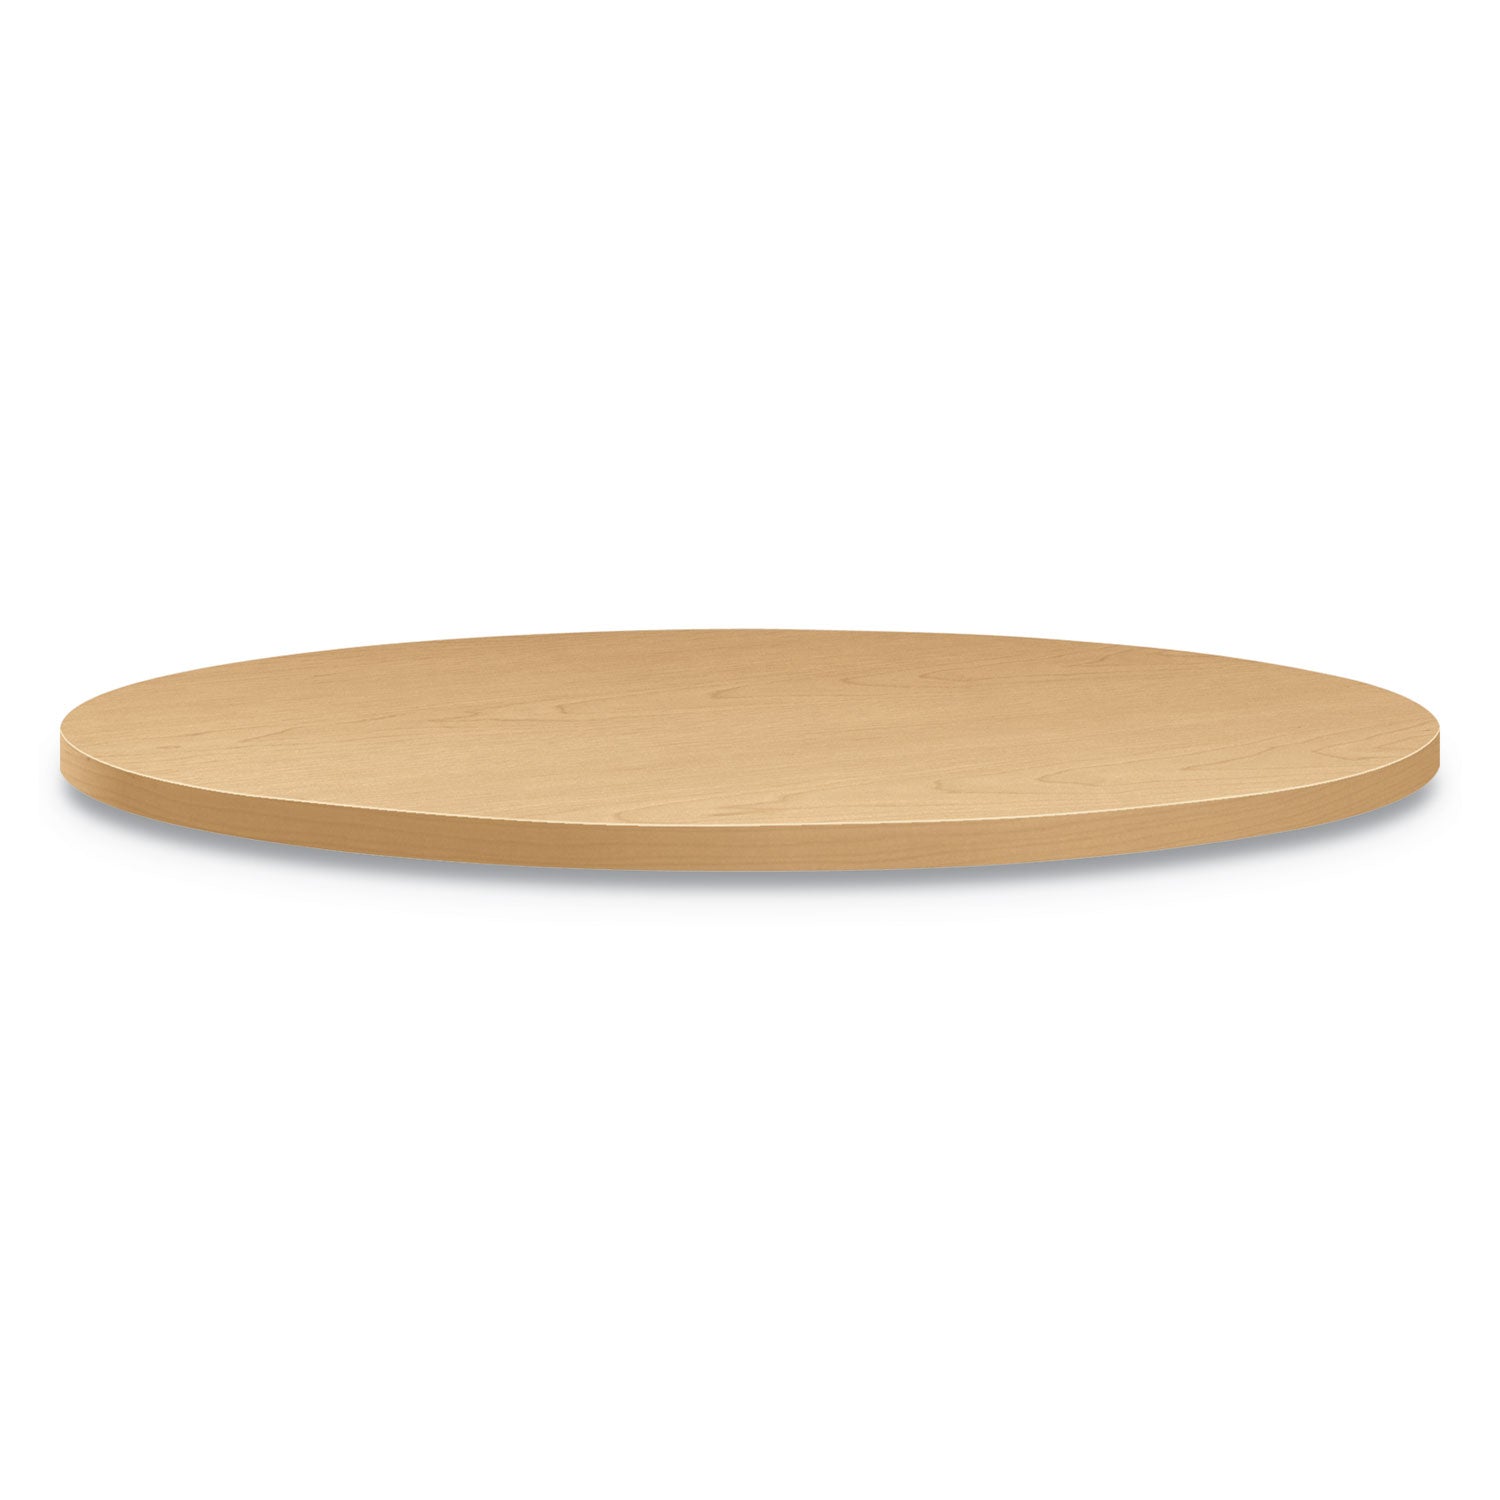 between-round-table-tops-36-diameter-natural-maple_honbtrnd36ndd - 1